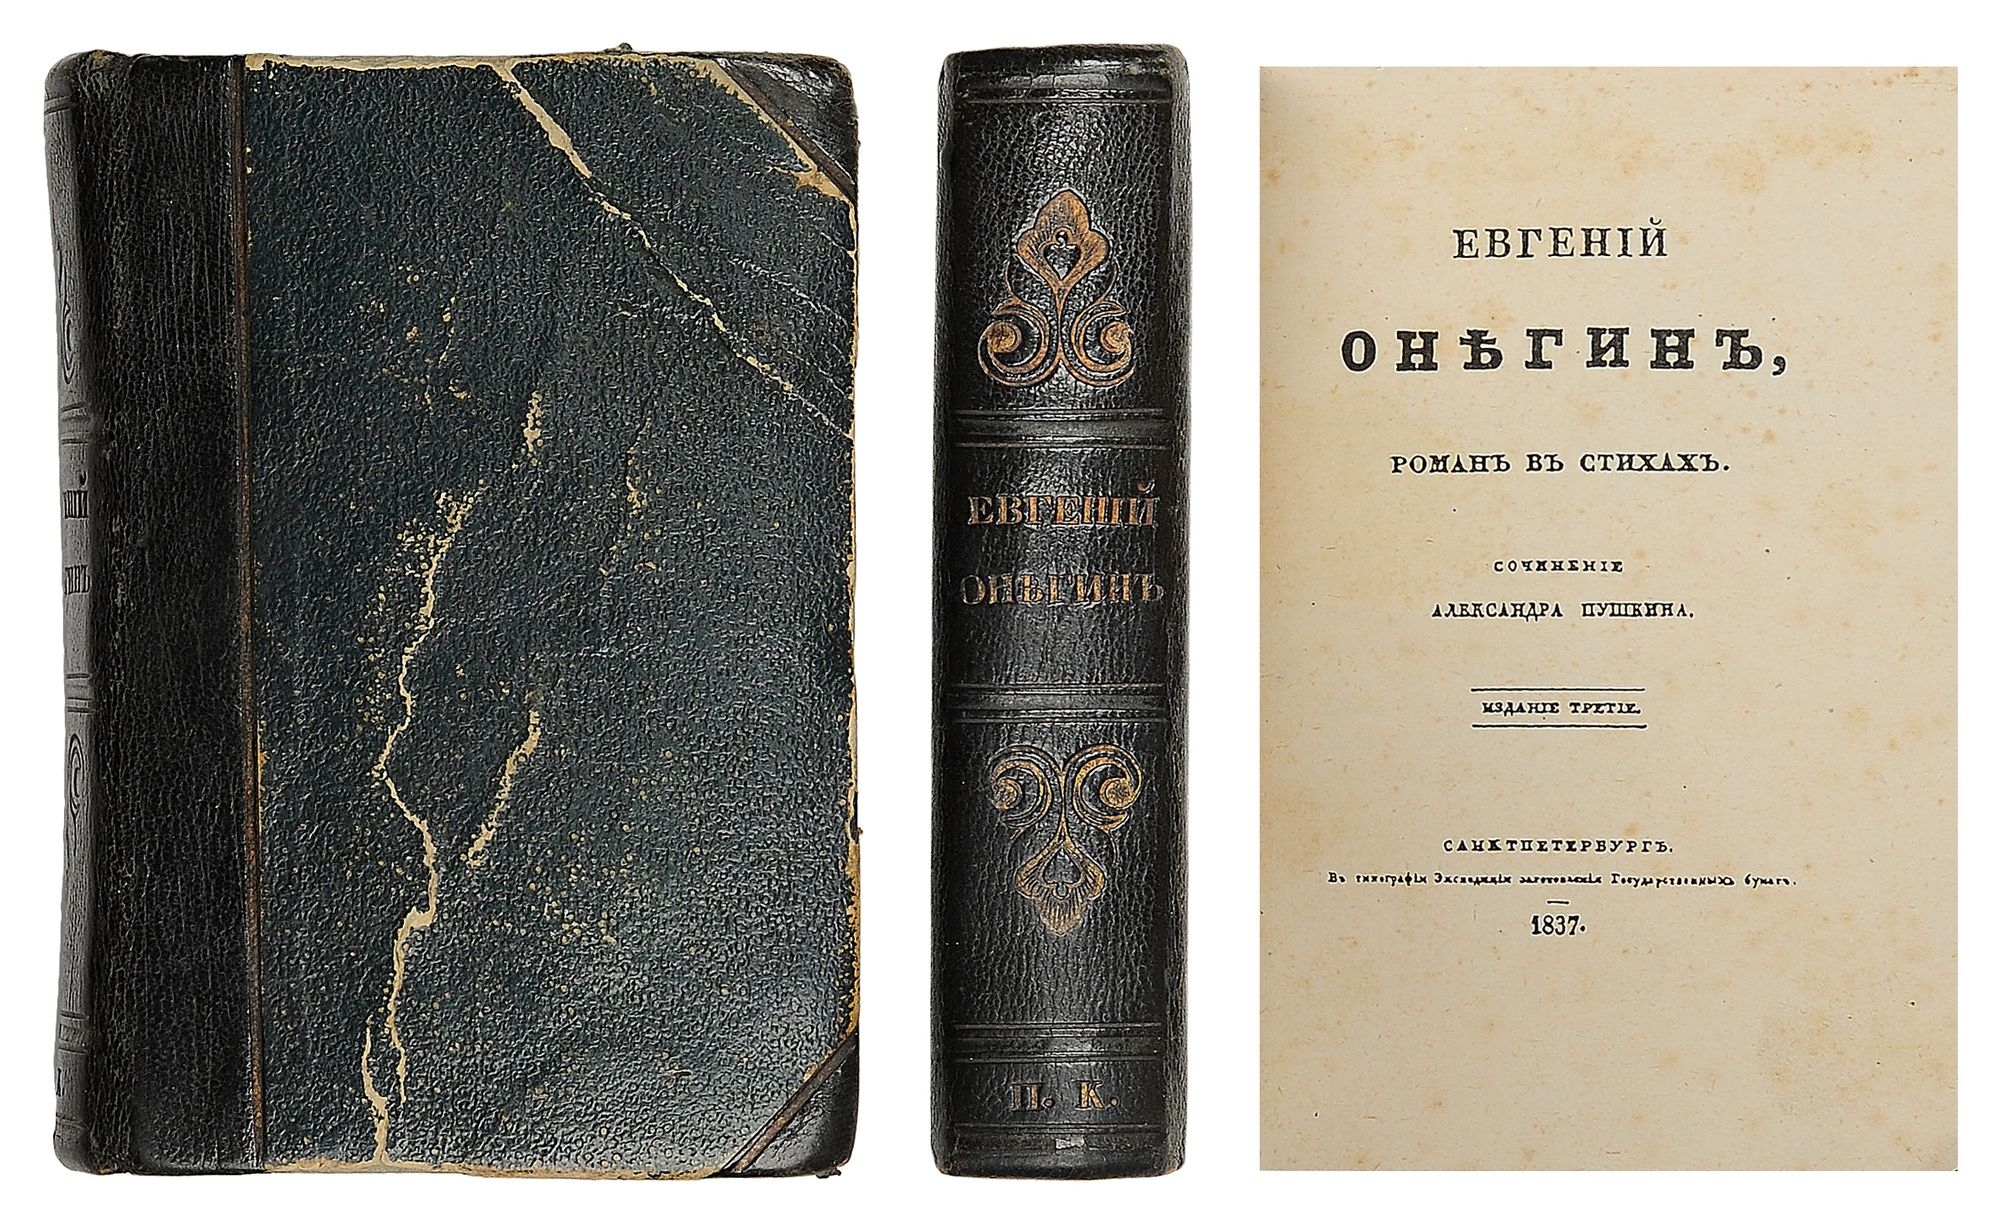 Евгений Онегин издание 1837